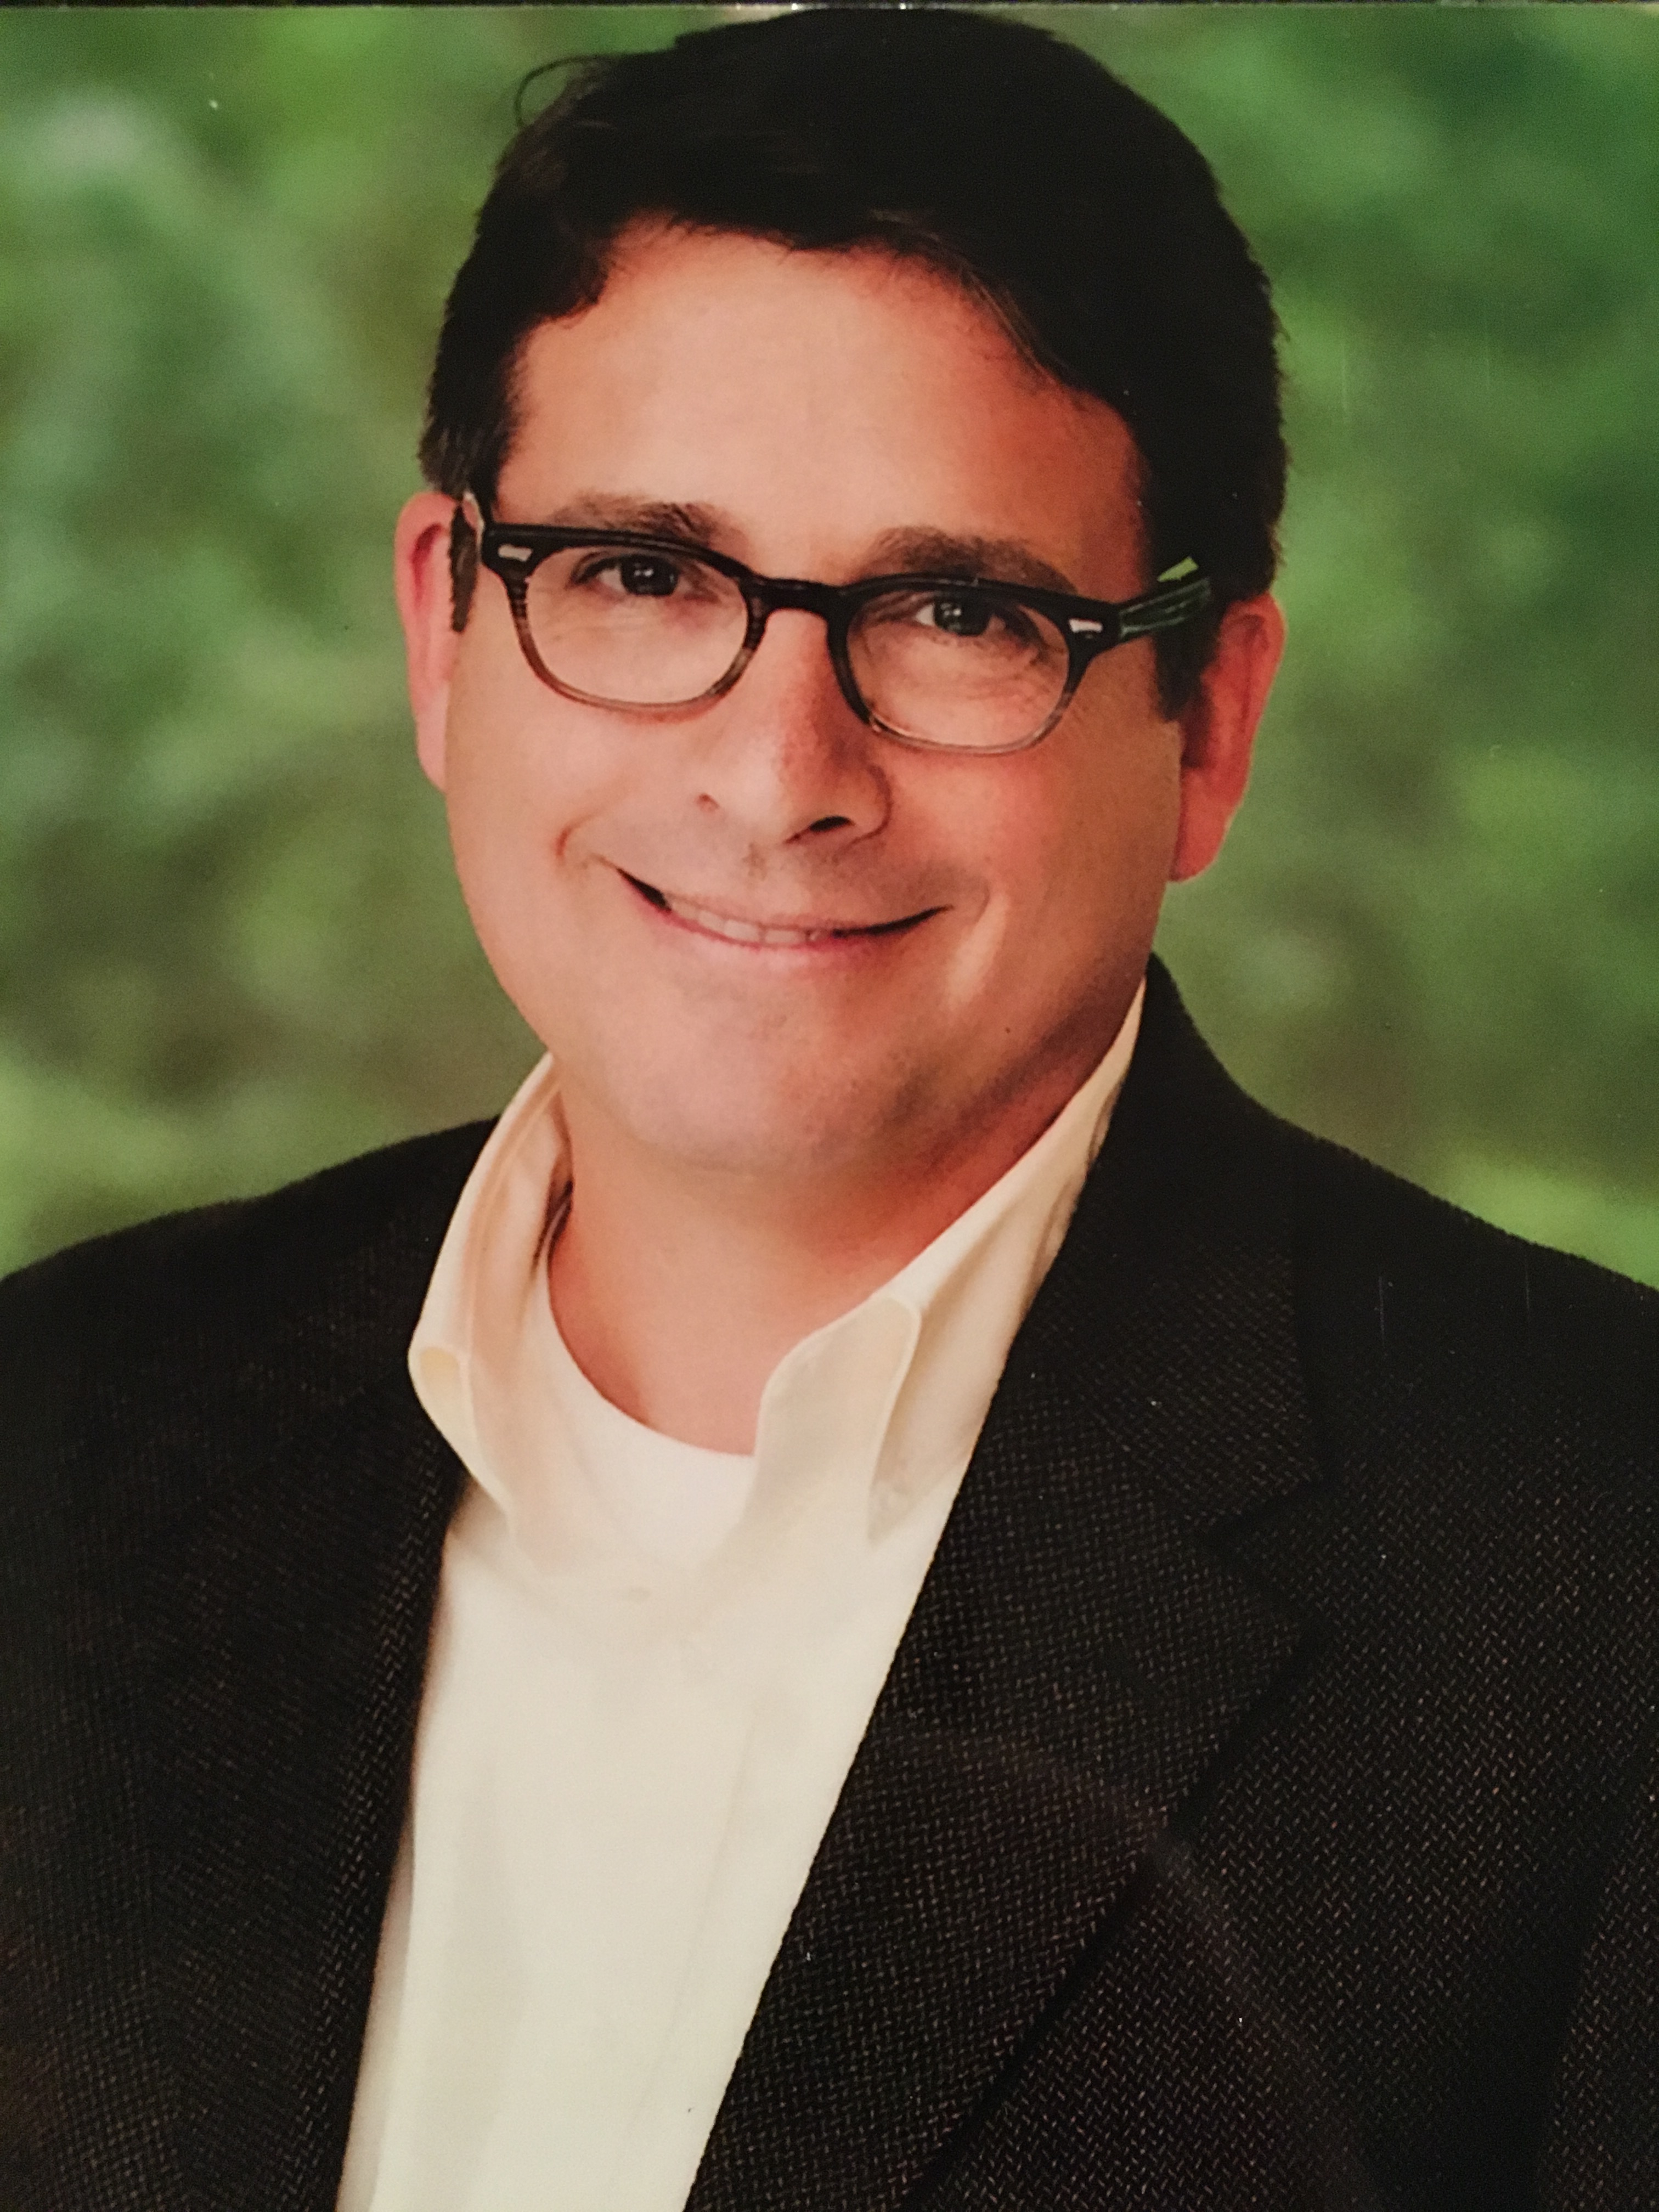 Experienced Sales Executive Pete Garofalo Joins Dynamis as National Accounts Director